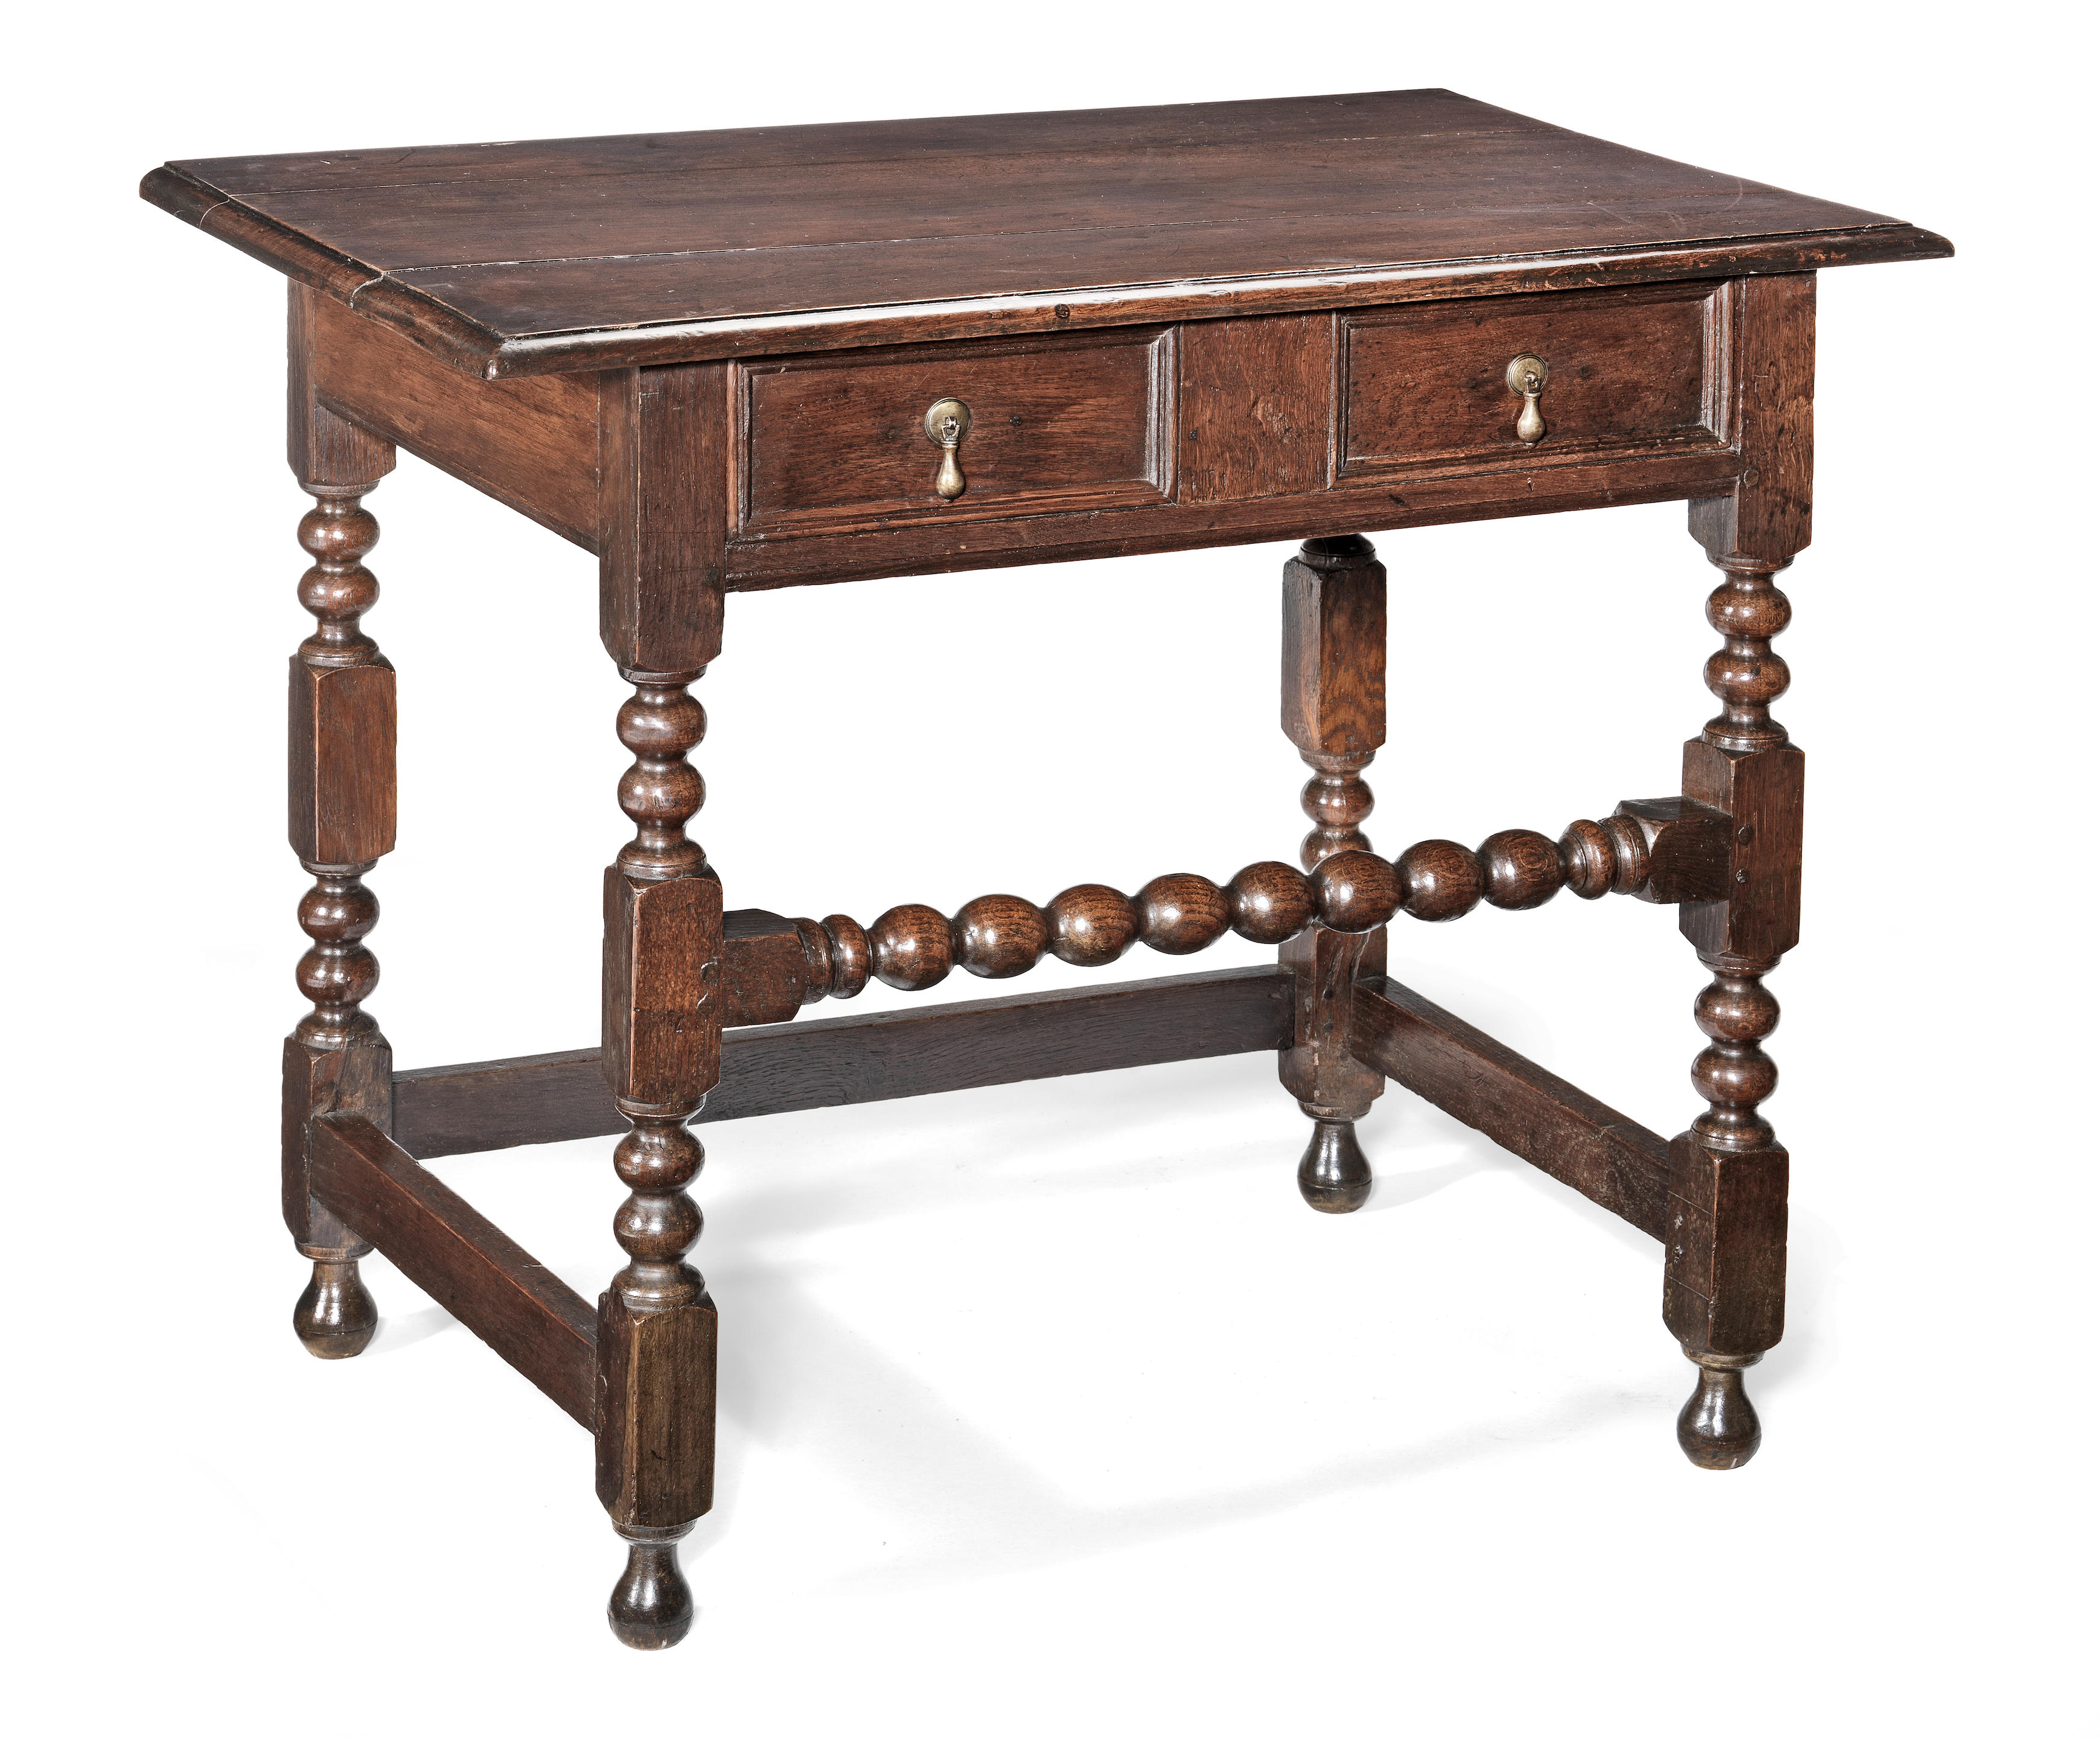 A Charles II joined oak side table, circa 1680